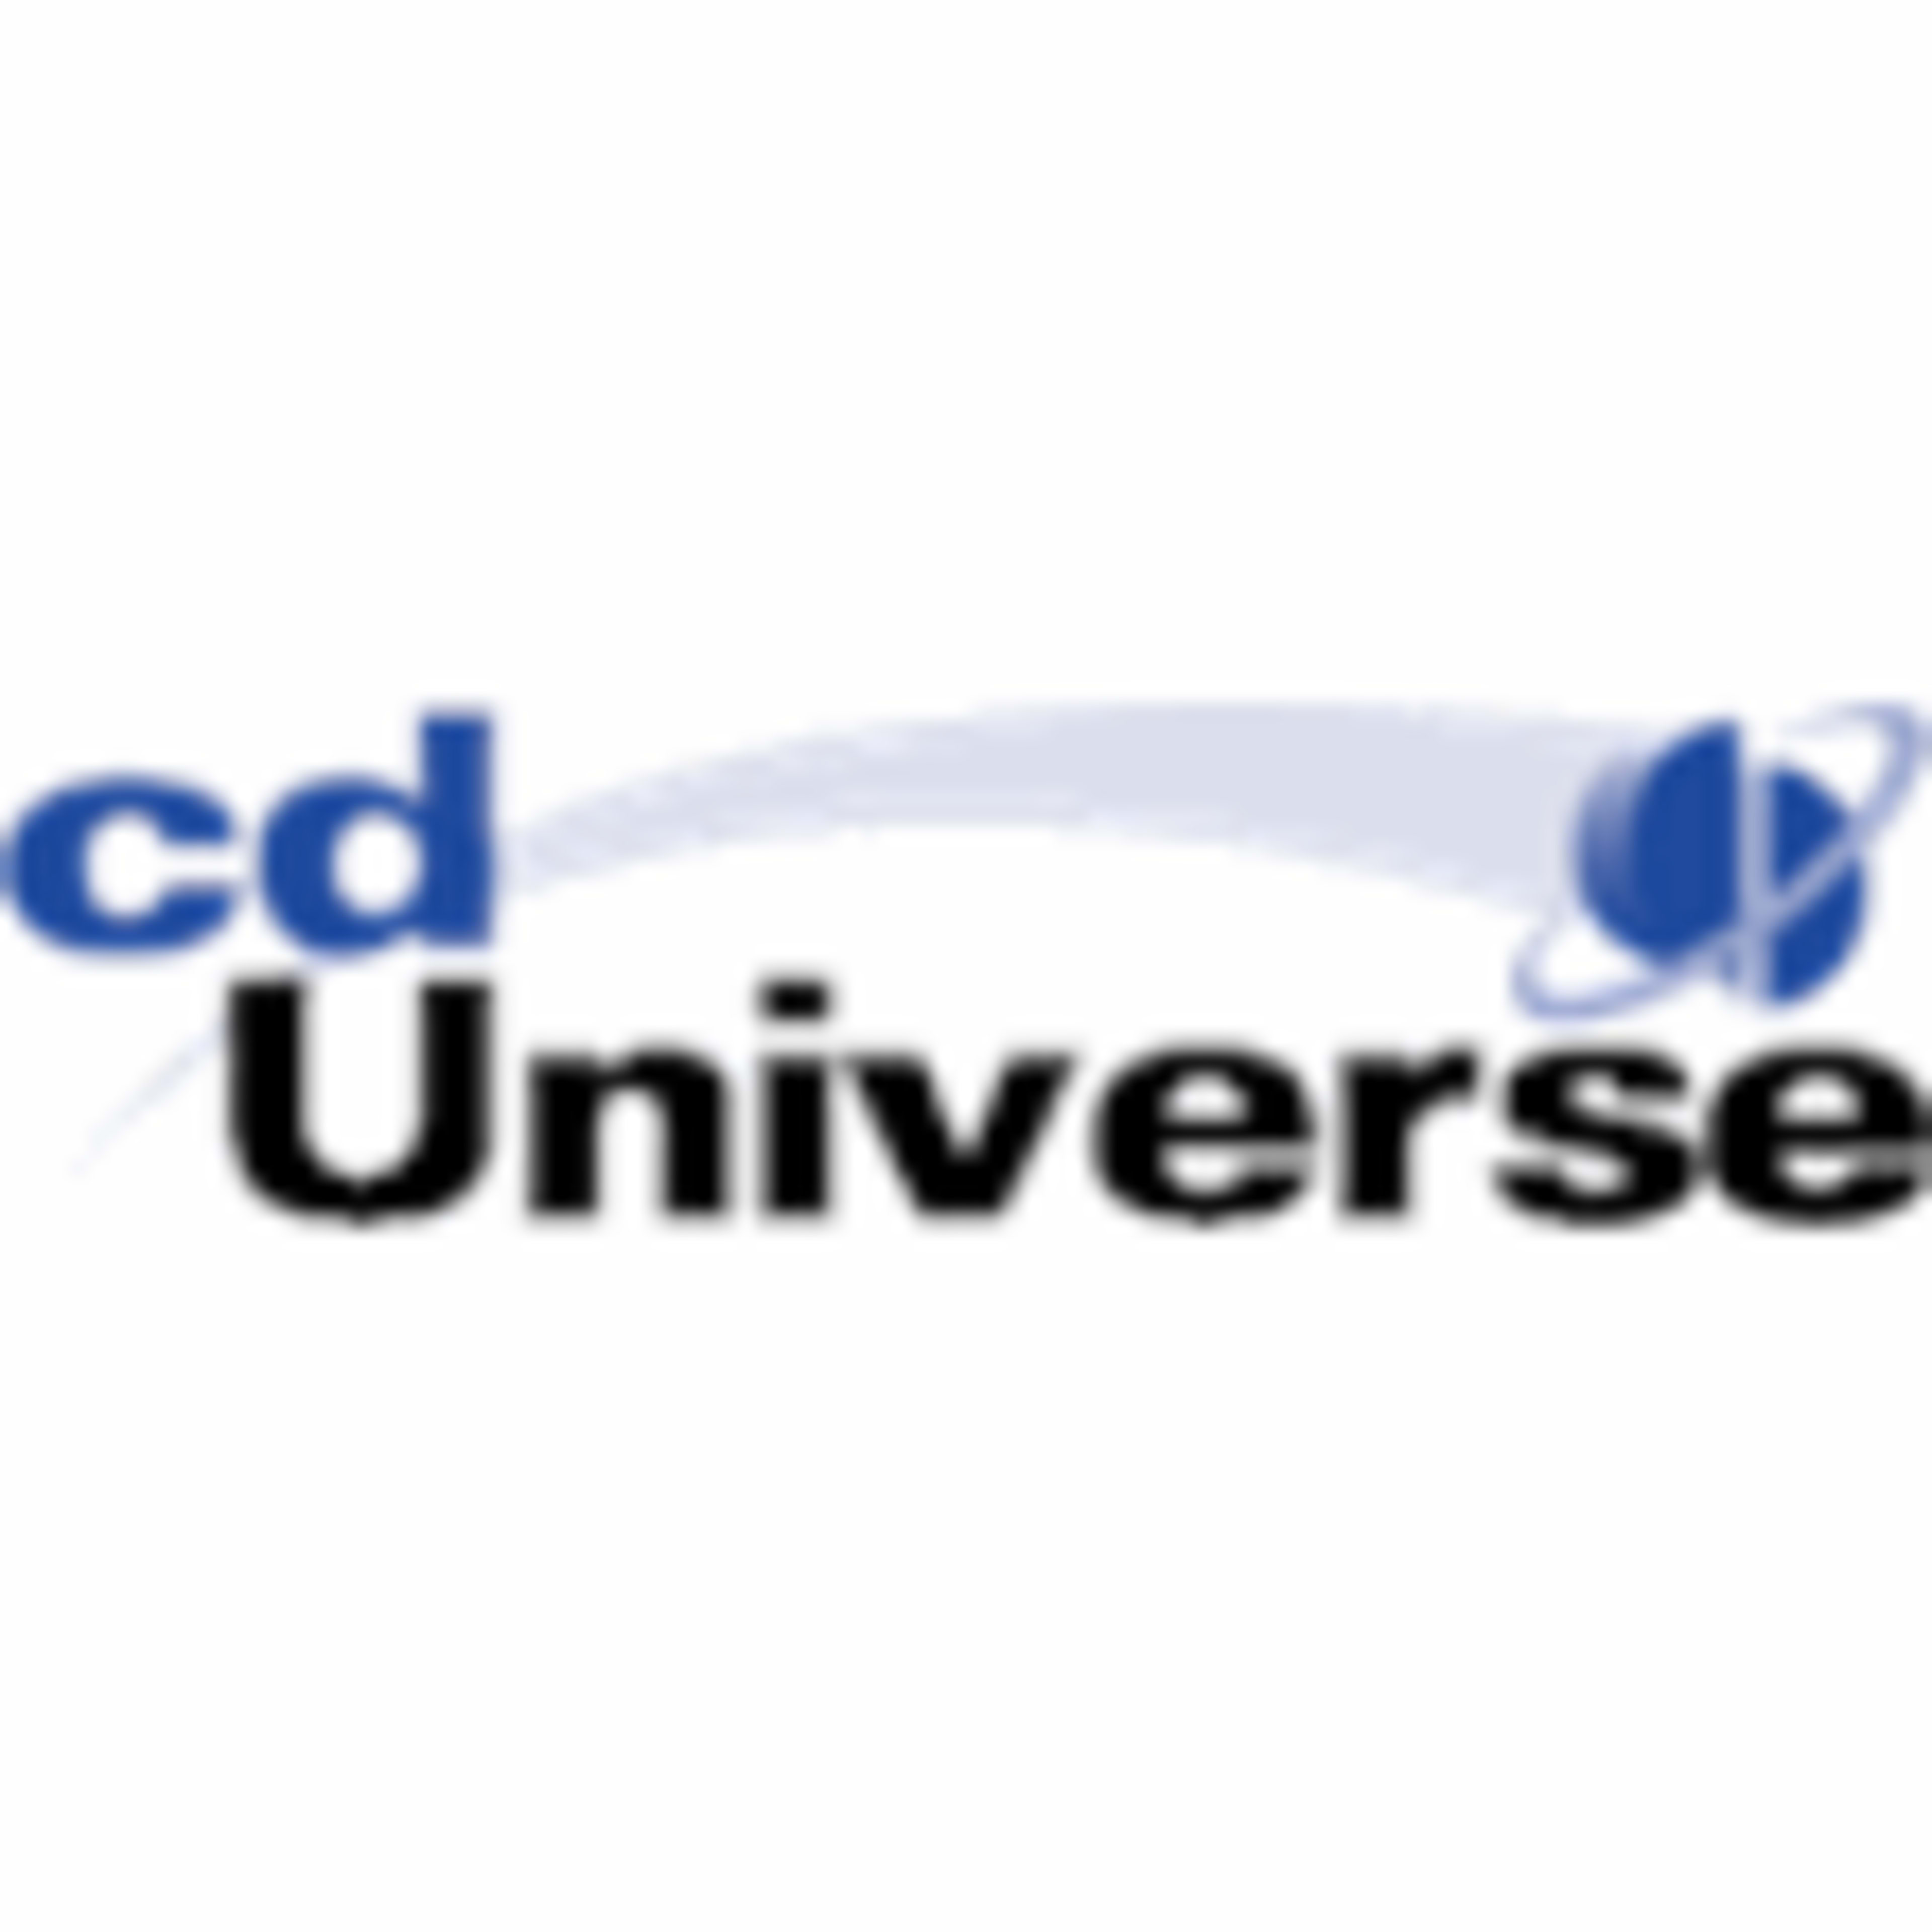 CD Universe Code